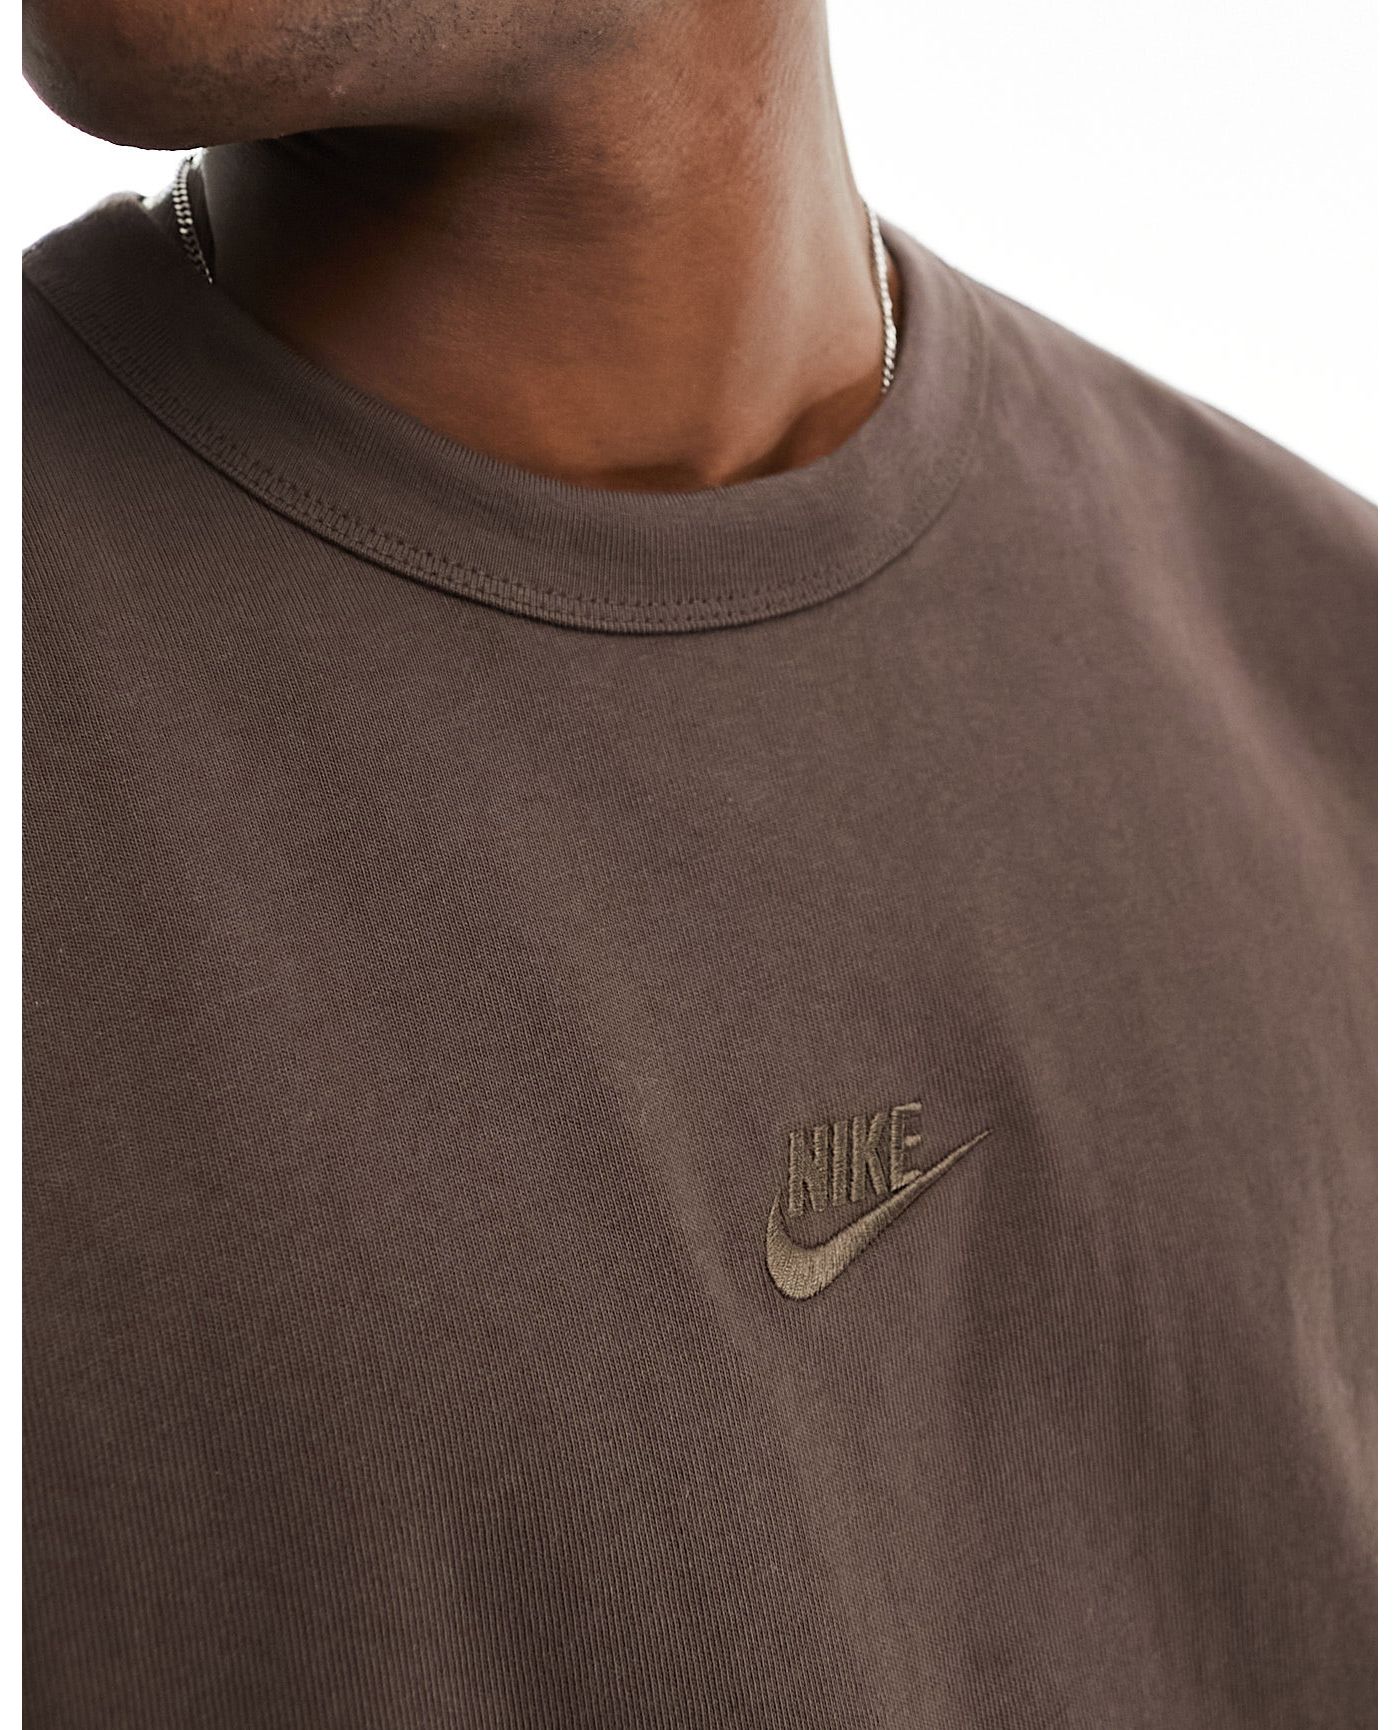  Nike Premium essential long sleeve t-shirt in brown 